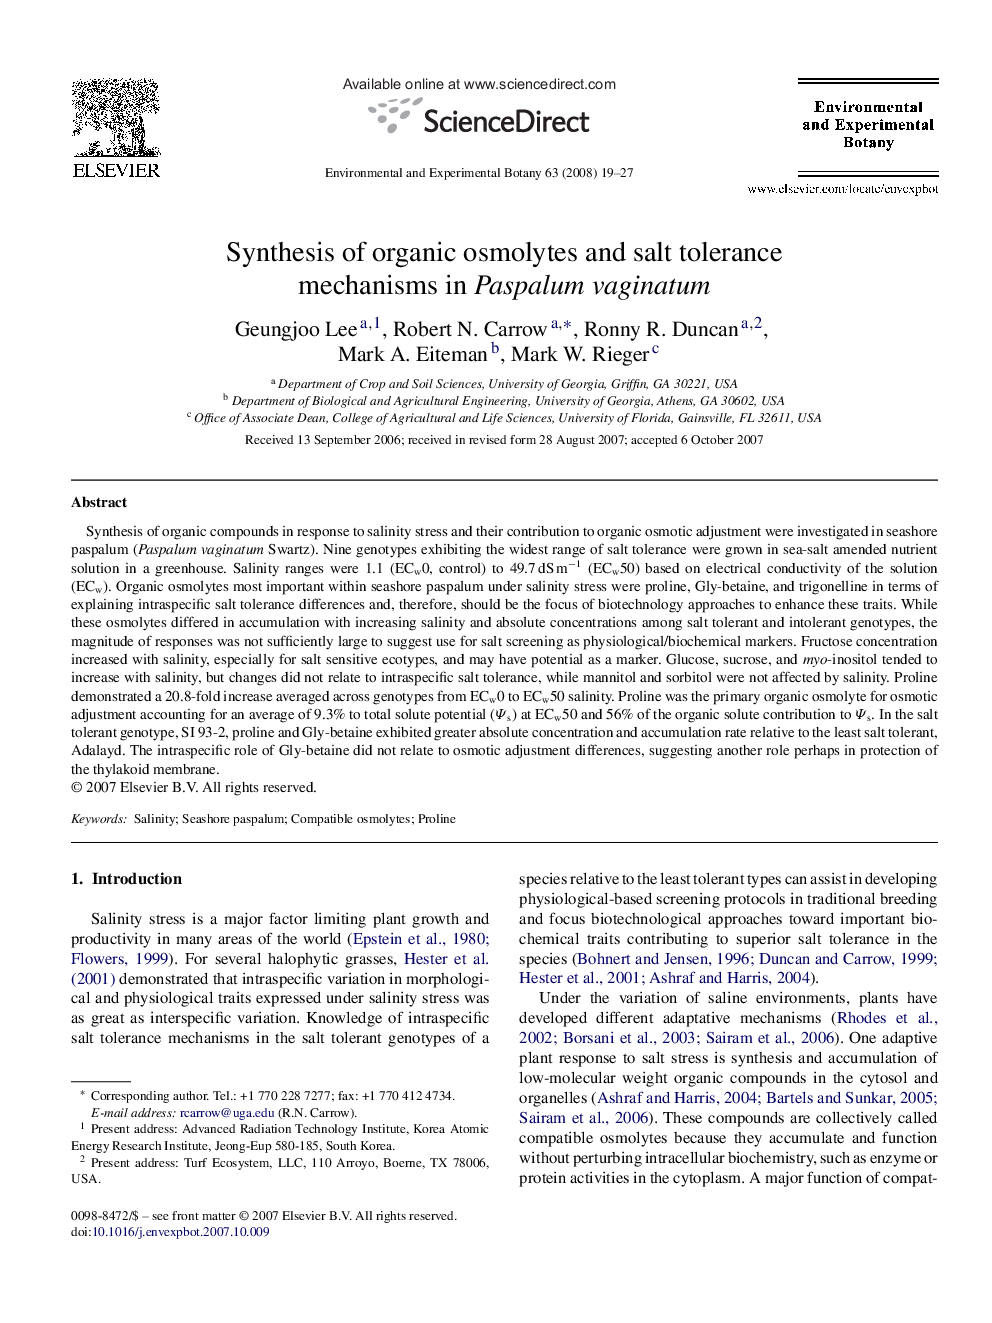 Synthesis of organic osmolytes and salt tolerance mechanisms in Paspalum vaginatum